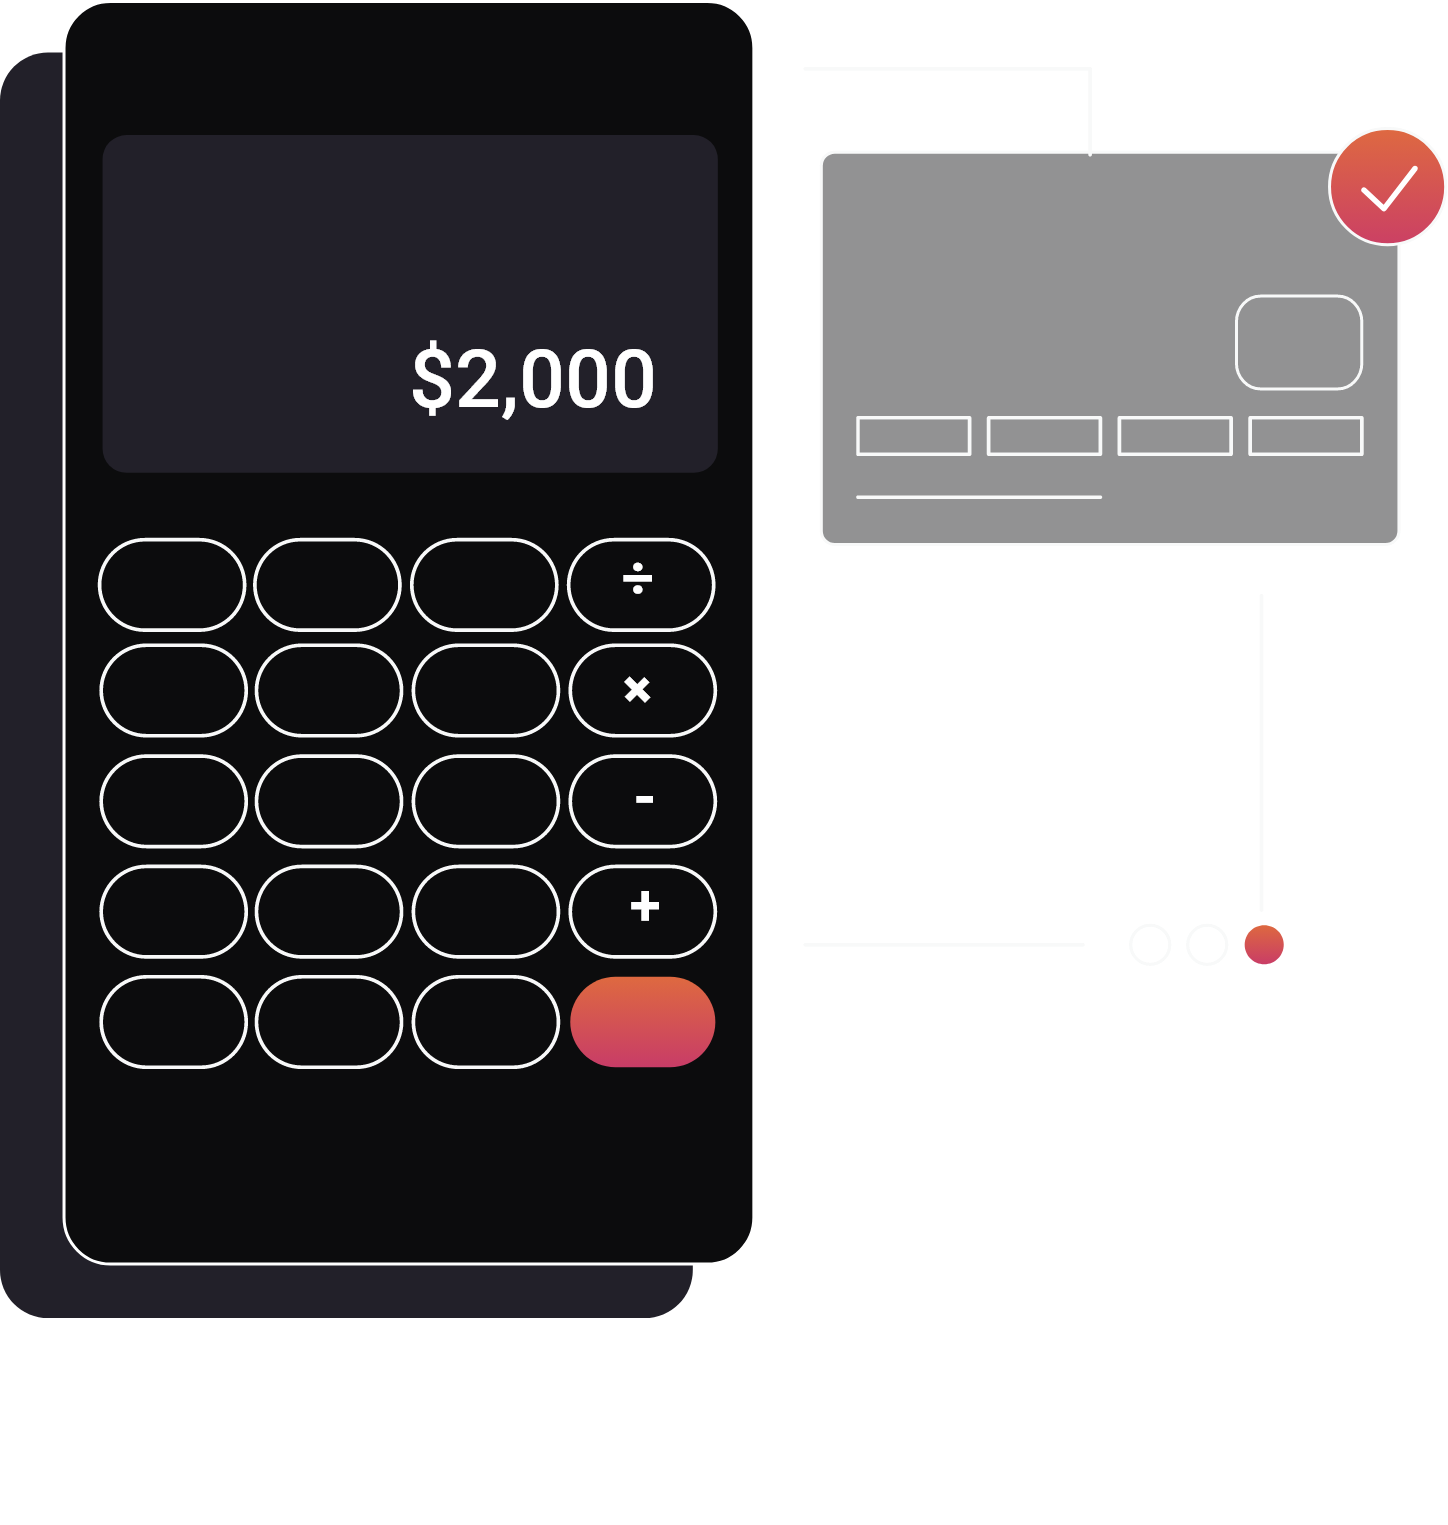 Calculator and debit card graphic